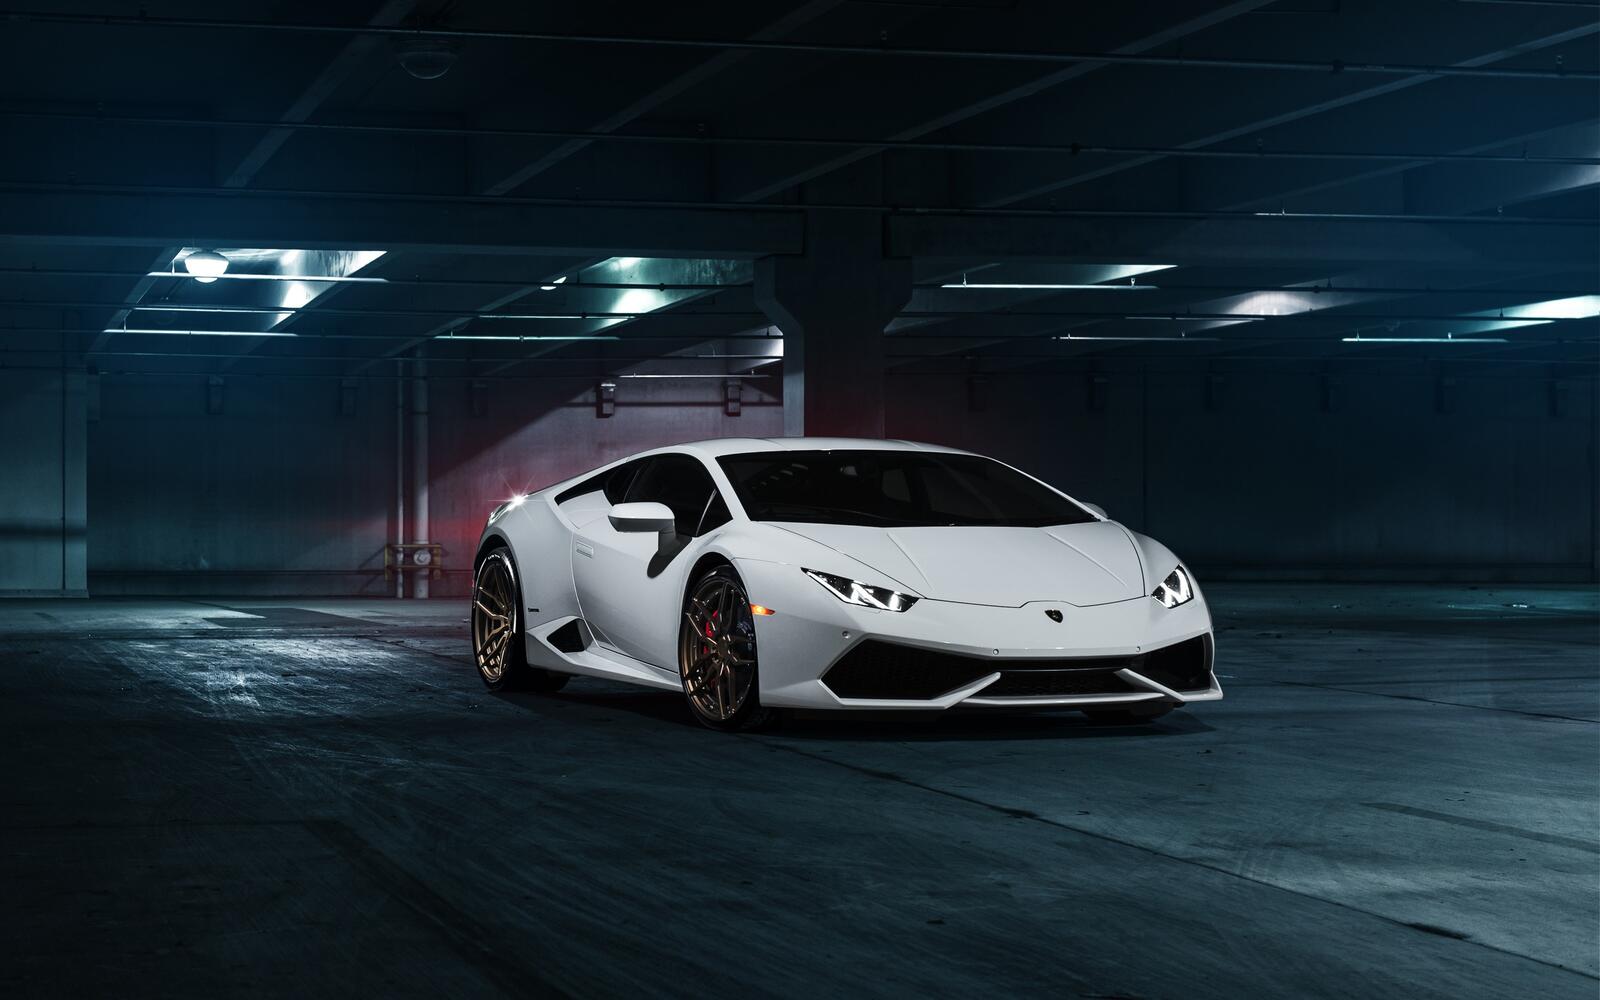 Free photo A white Lamborghini Huracan in an underground parking lot.